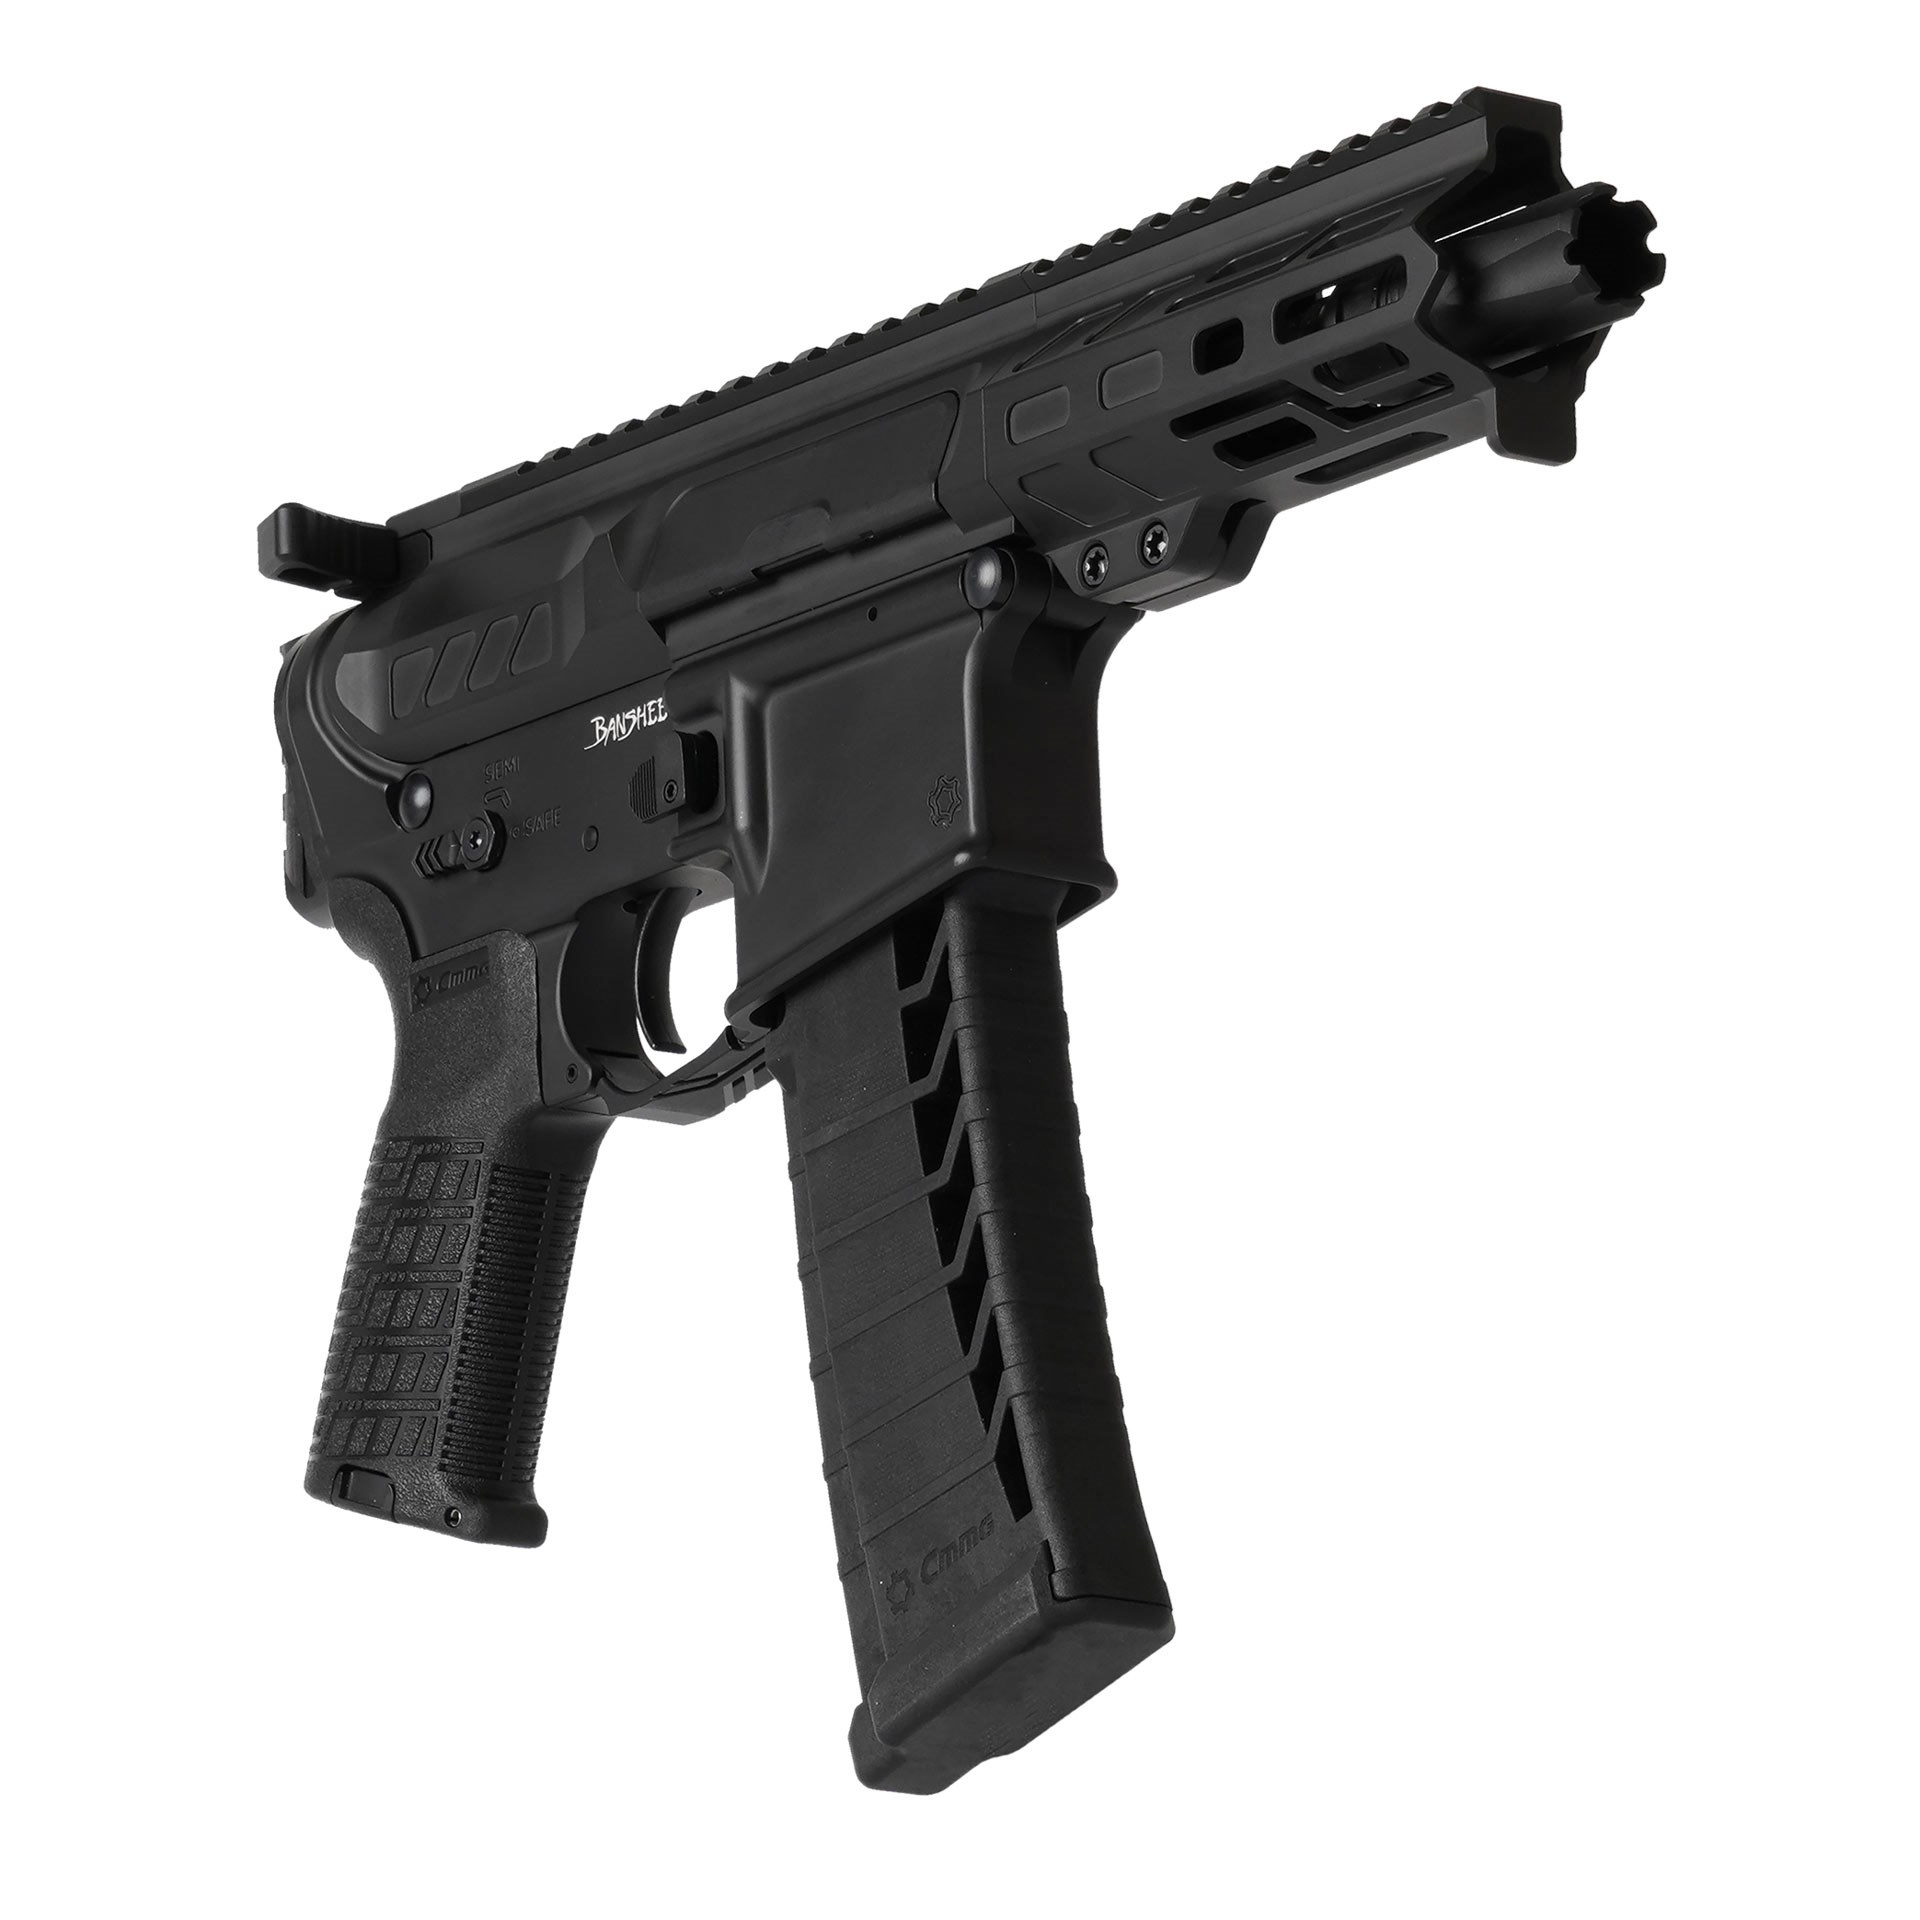 Dynamic view of CMMG Mk4 pistol quartering view black gun handgun 22lr